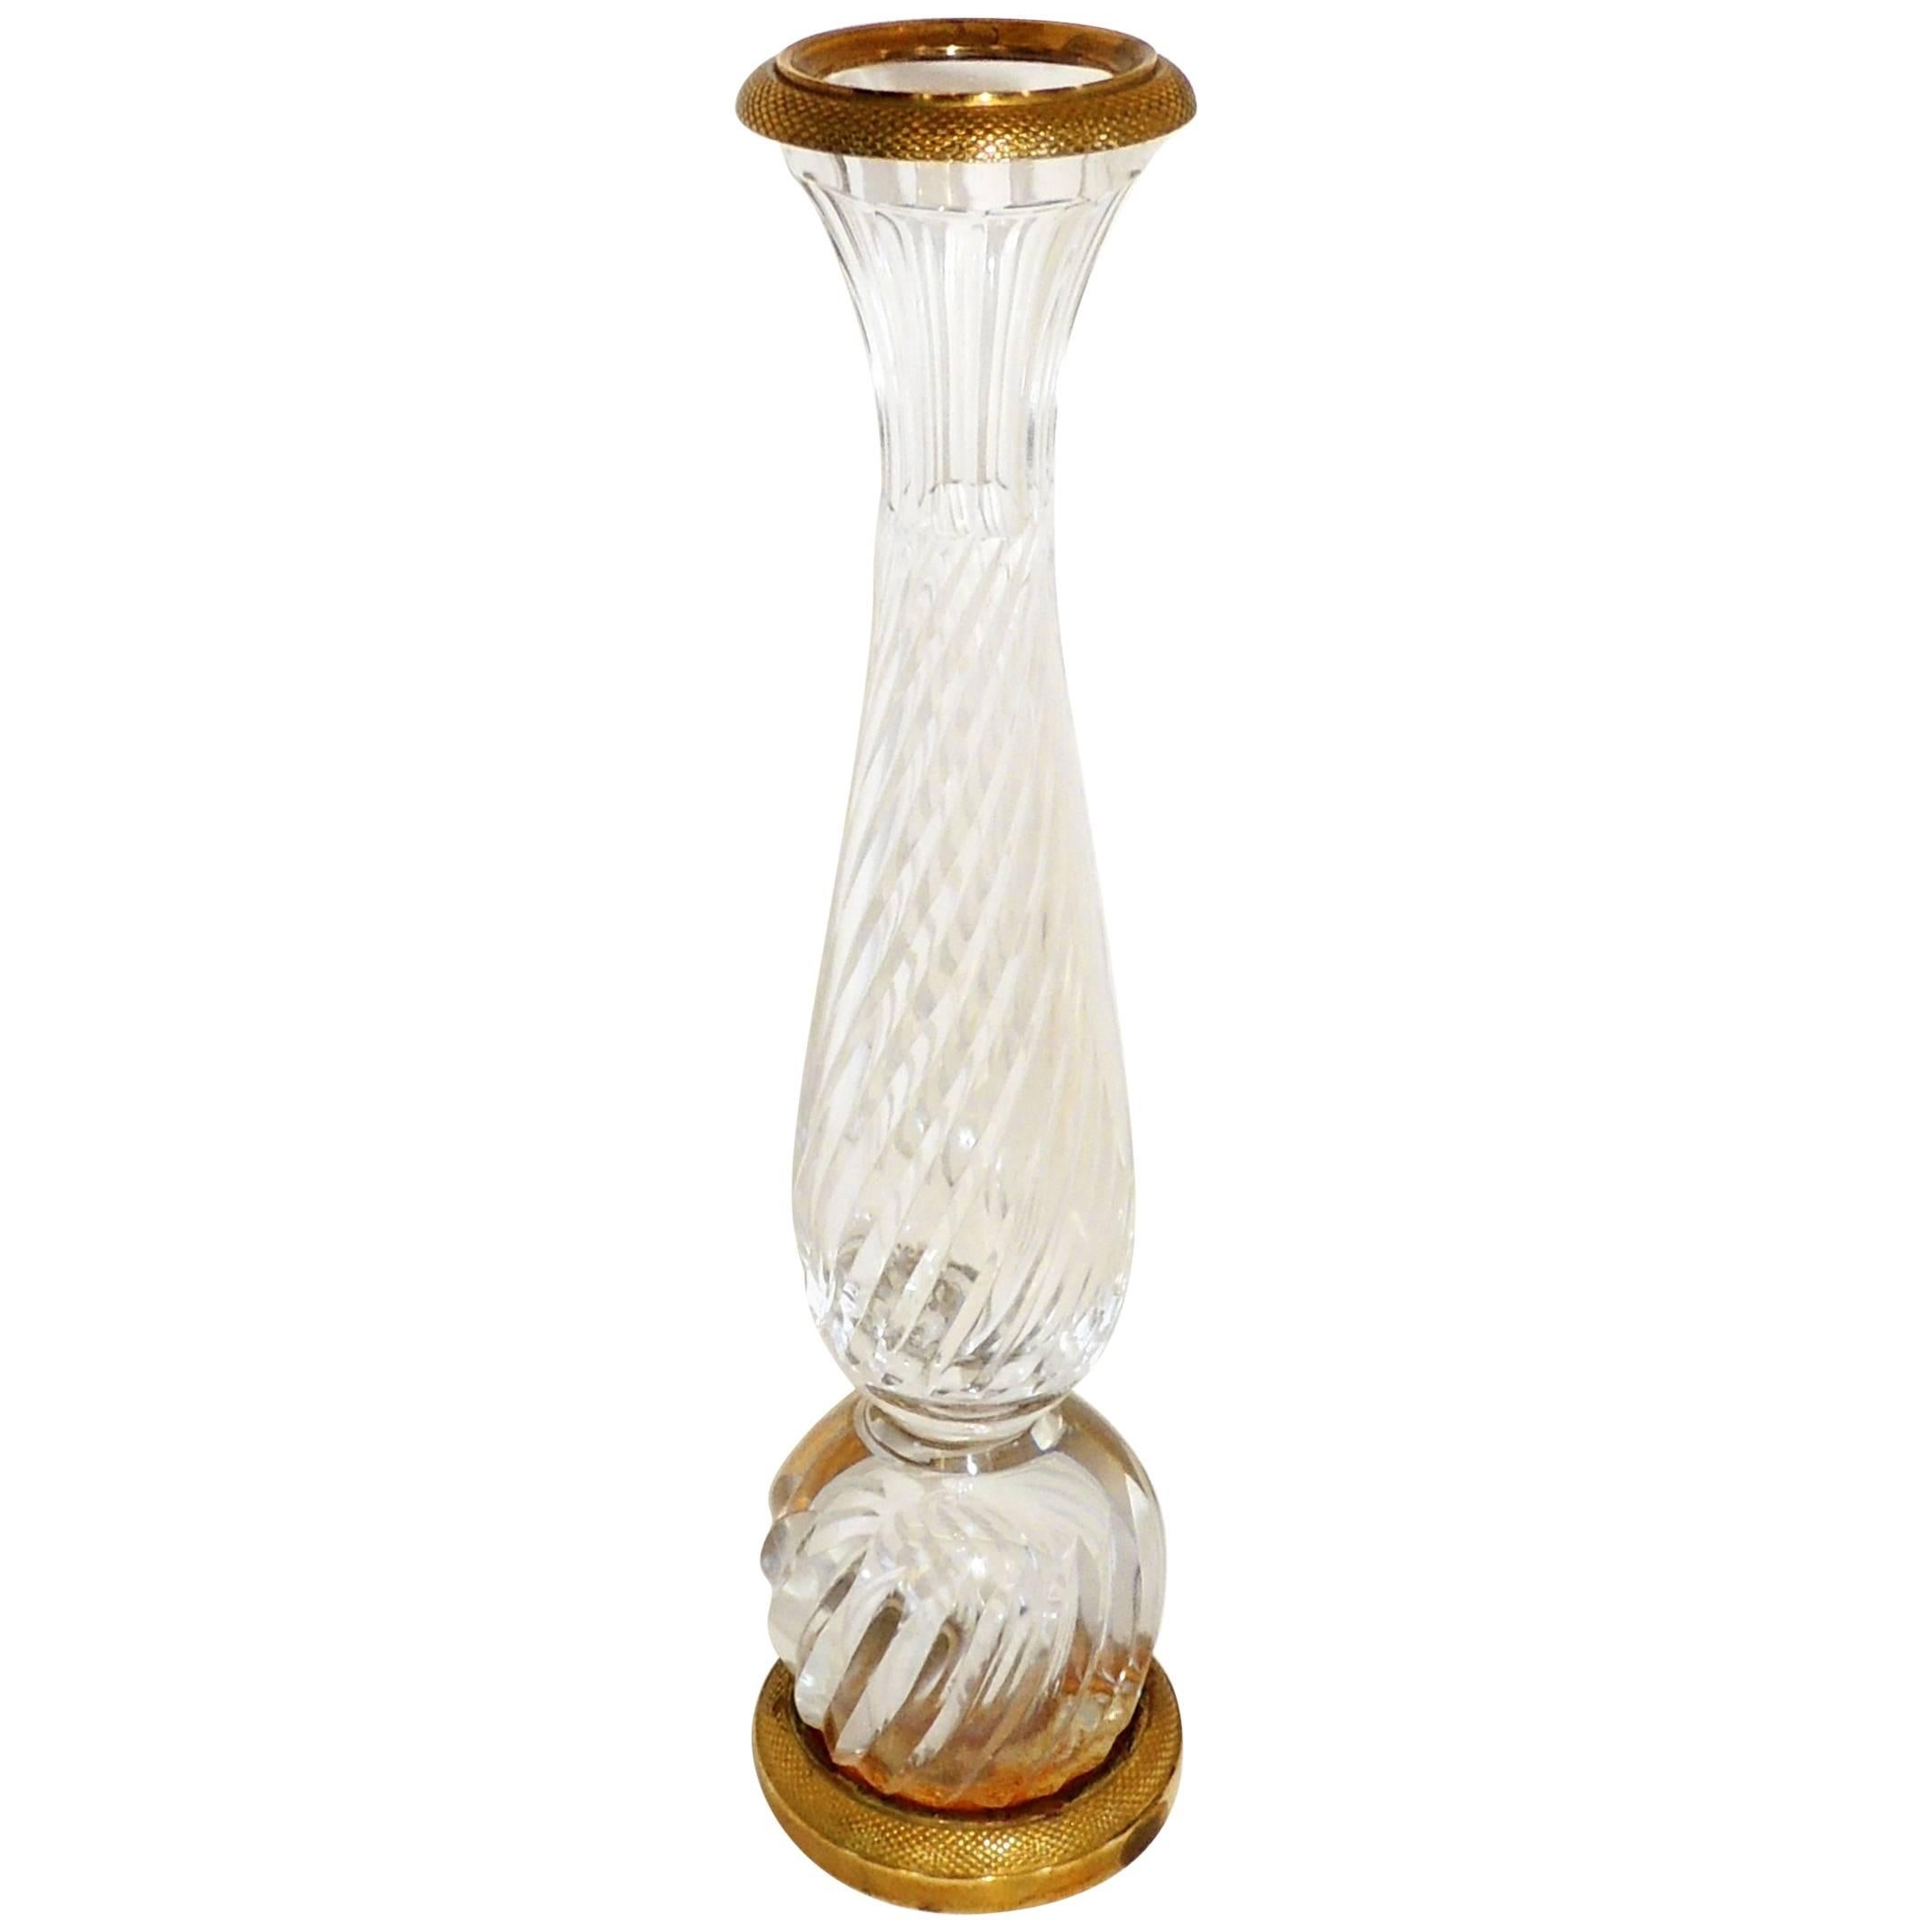 Wonderful French Dore Bronze Crystal Swirl Glass Ormolu-Mounted Baccarat Vase